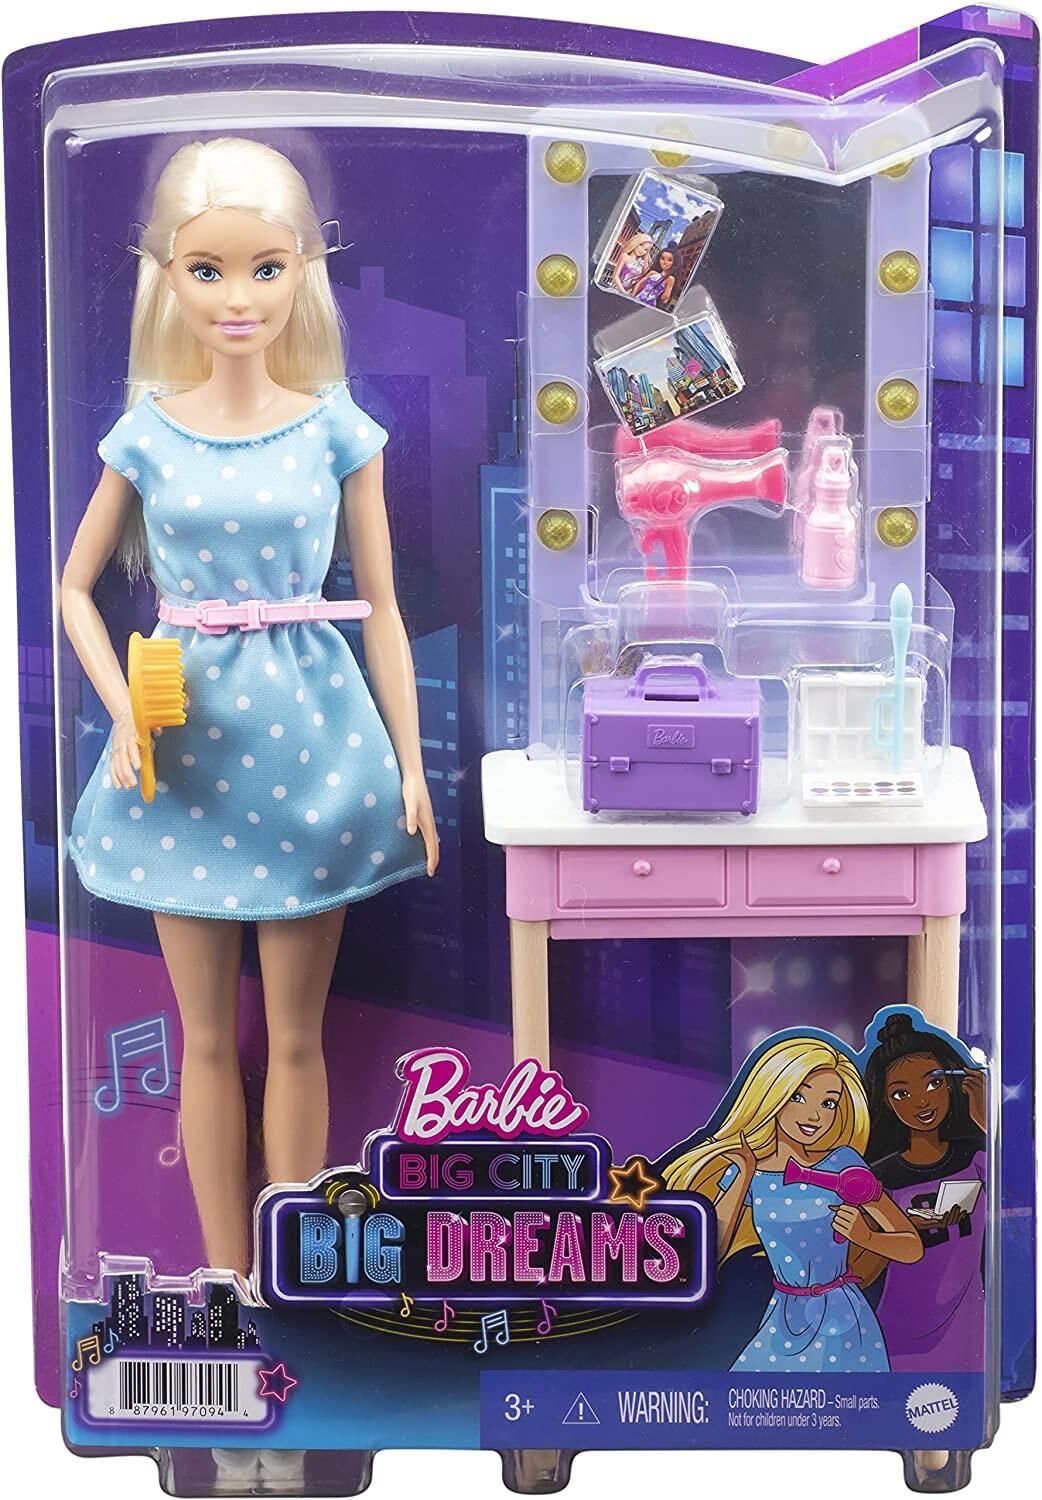 Barbie Big City Big Dreams Doll & Playset